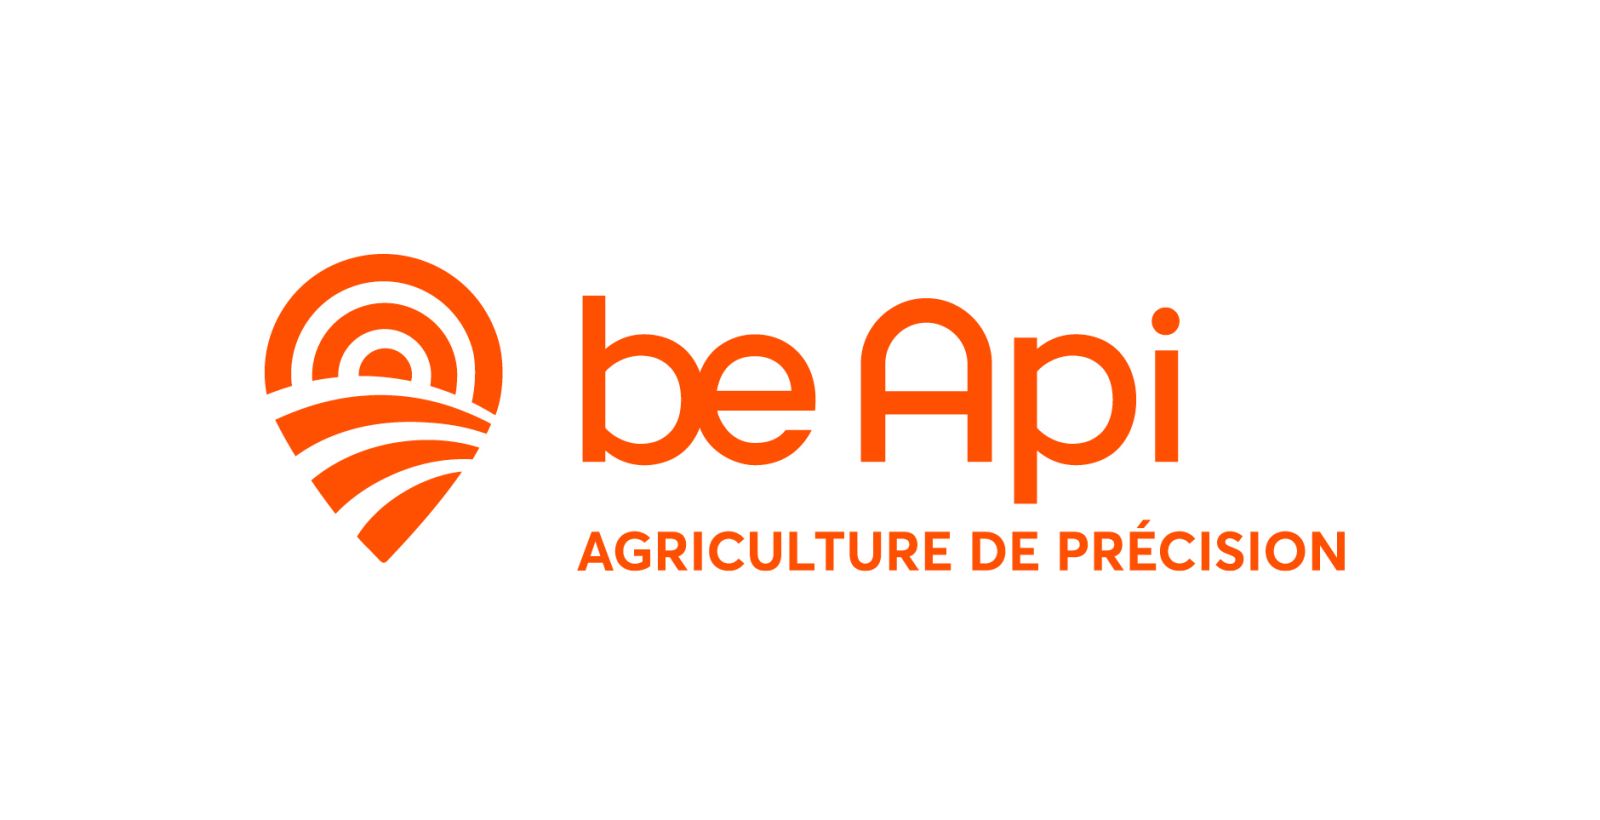 creative branding design of be api by grapheine